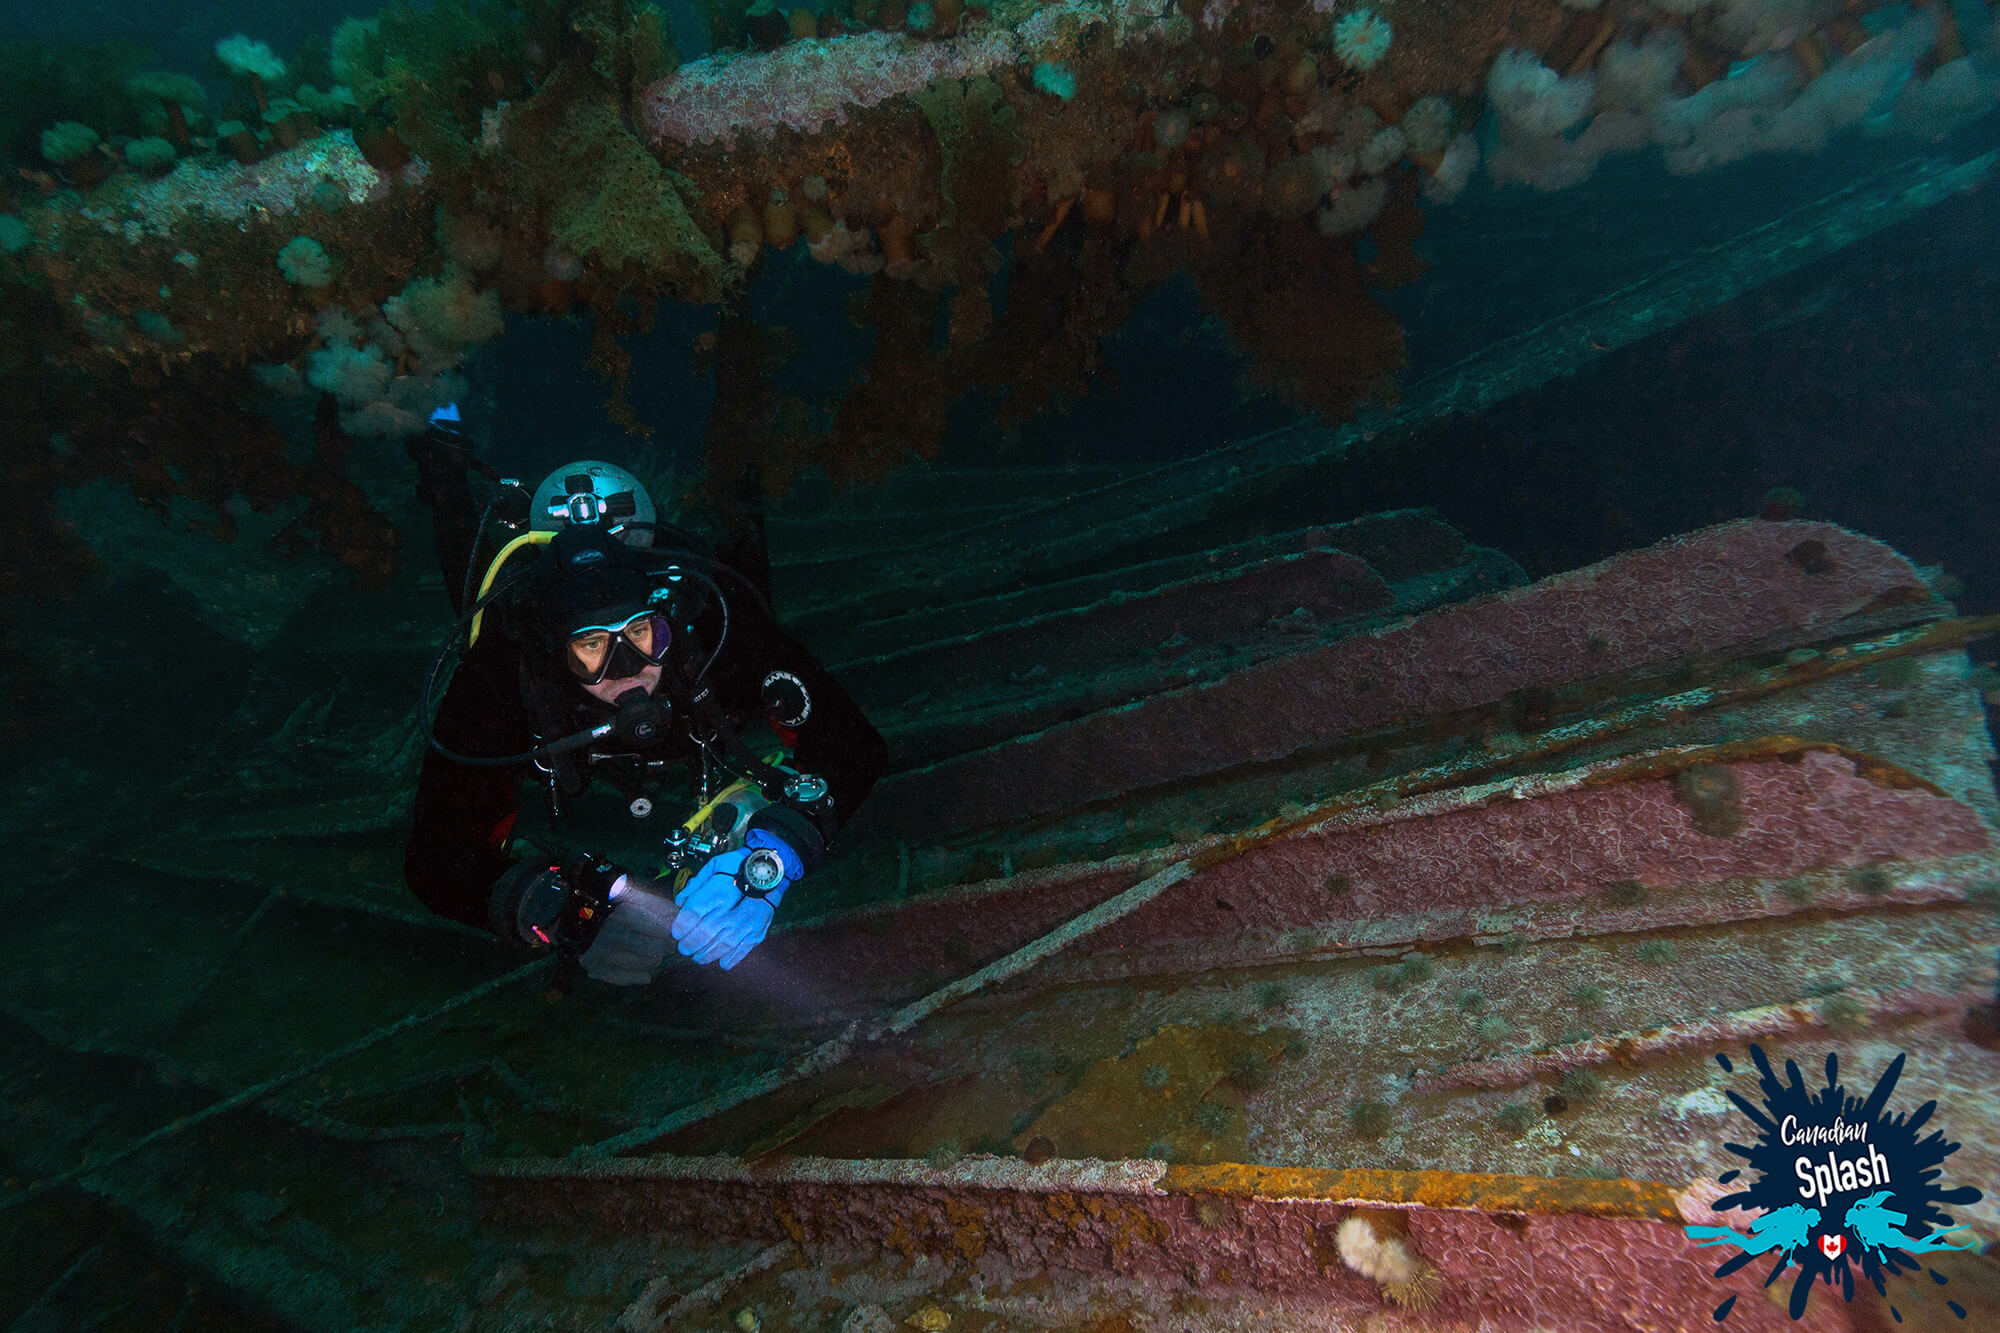 Joey Scuba Diving Under A Piece Of Shipwreck Debris In Newfoundland, Canada